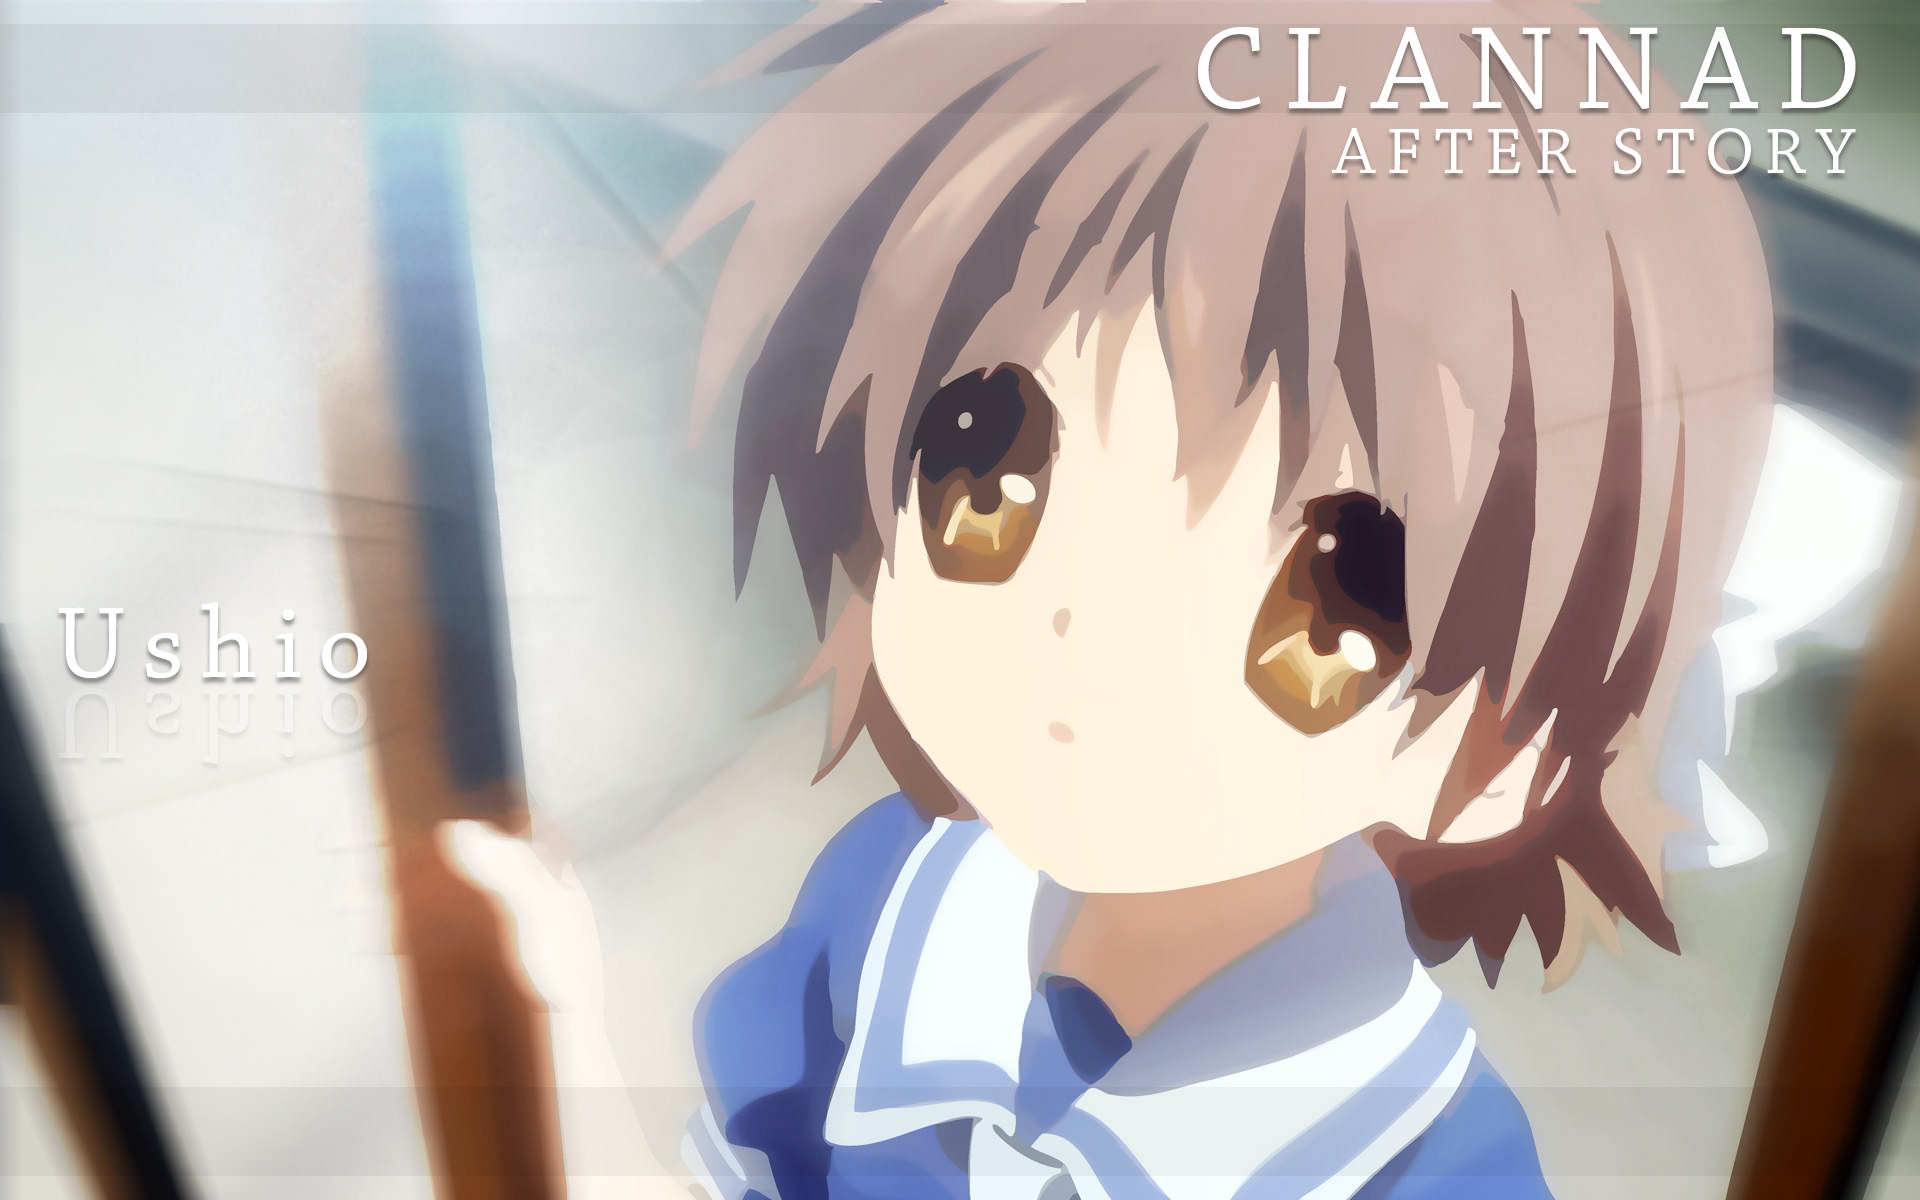 Clannad TV [Nardoum] Ushio - Clannad After Story Wall